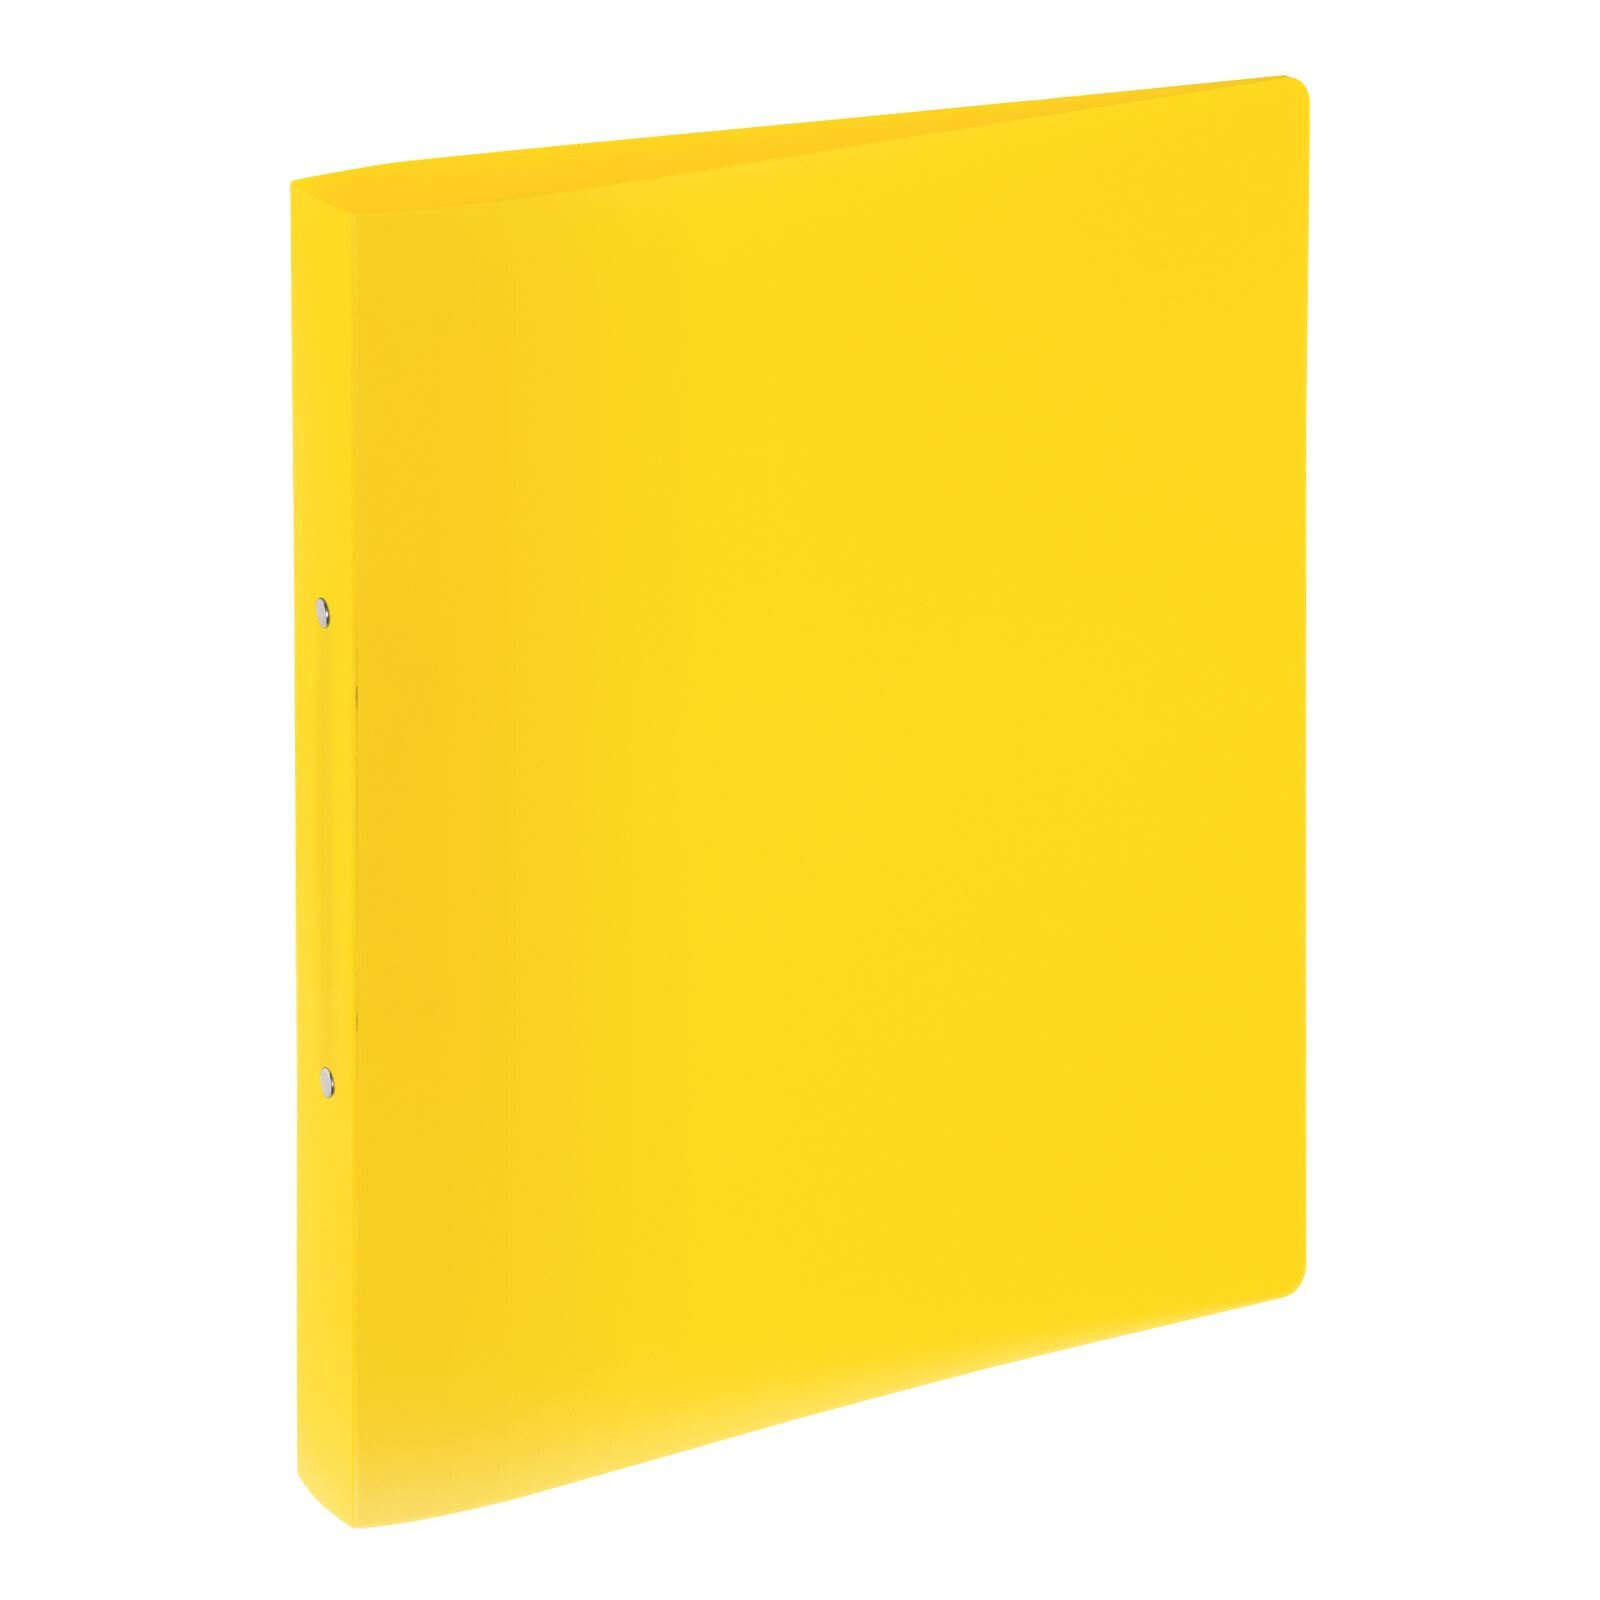 Pagna 20900-04 - A4 - Round ring - Storage - Polypropylene (PP) - Yellow - Yellow